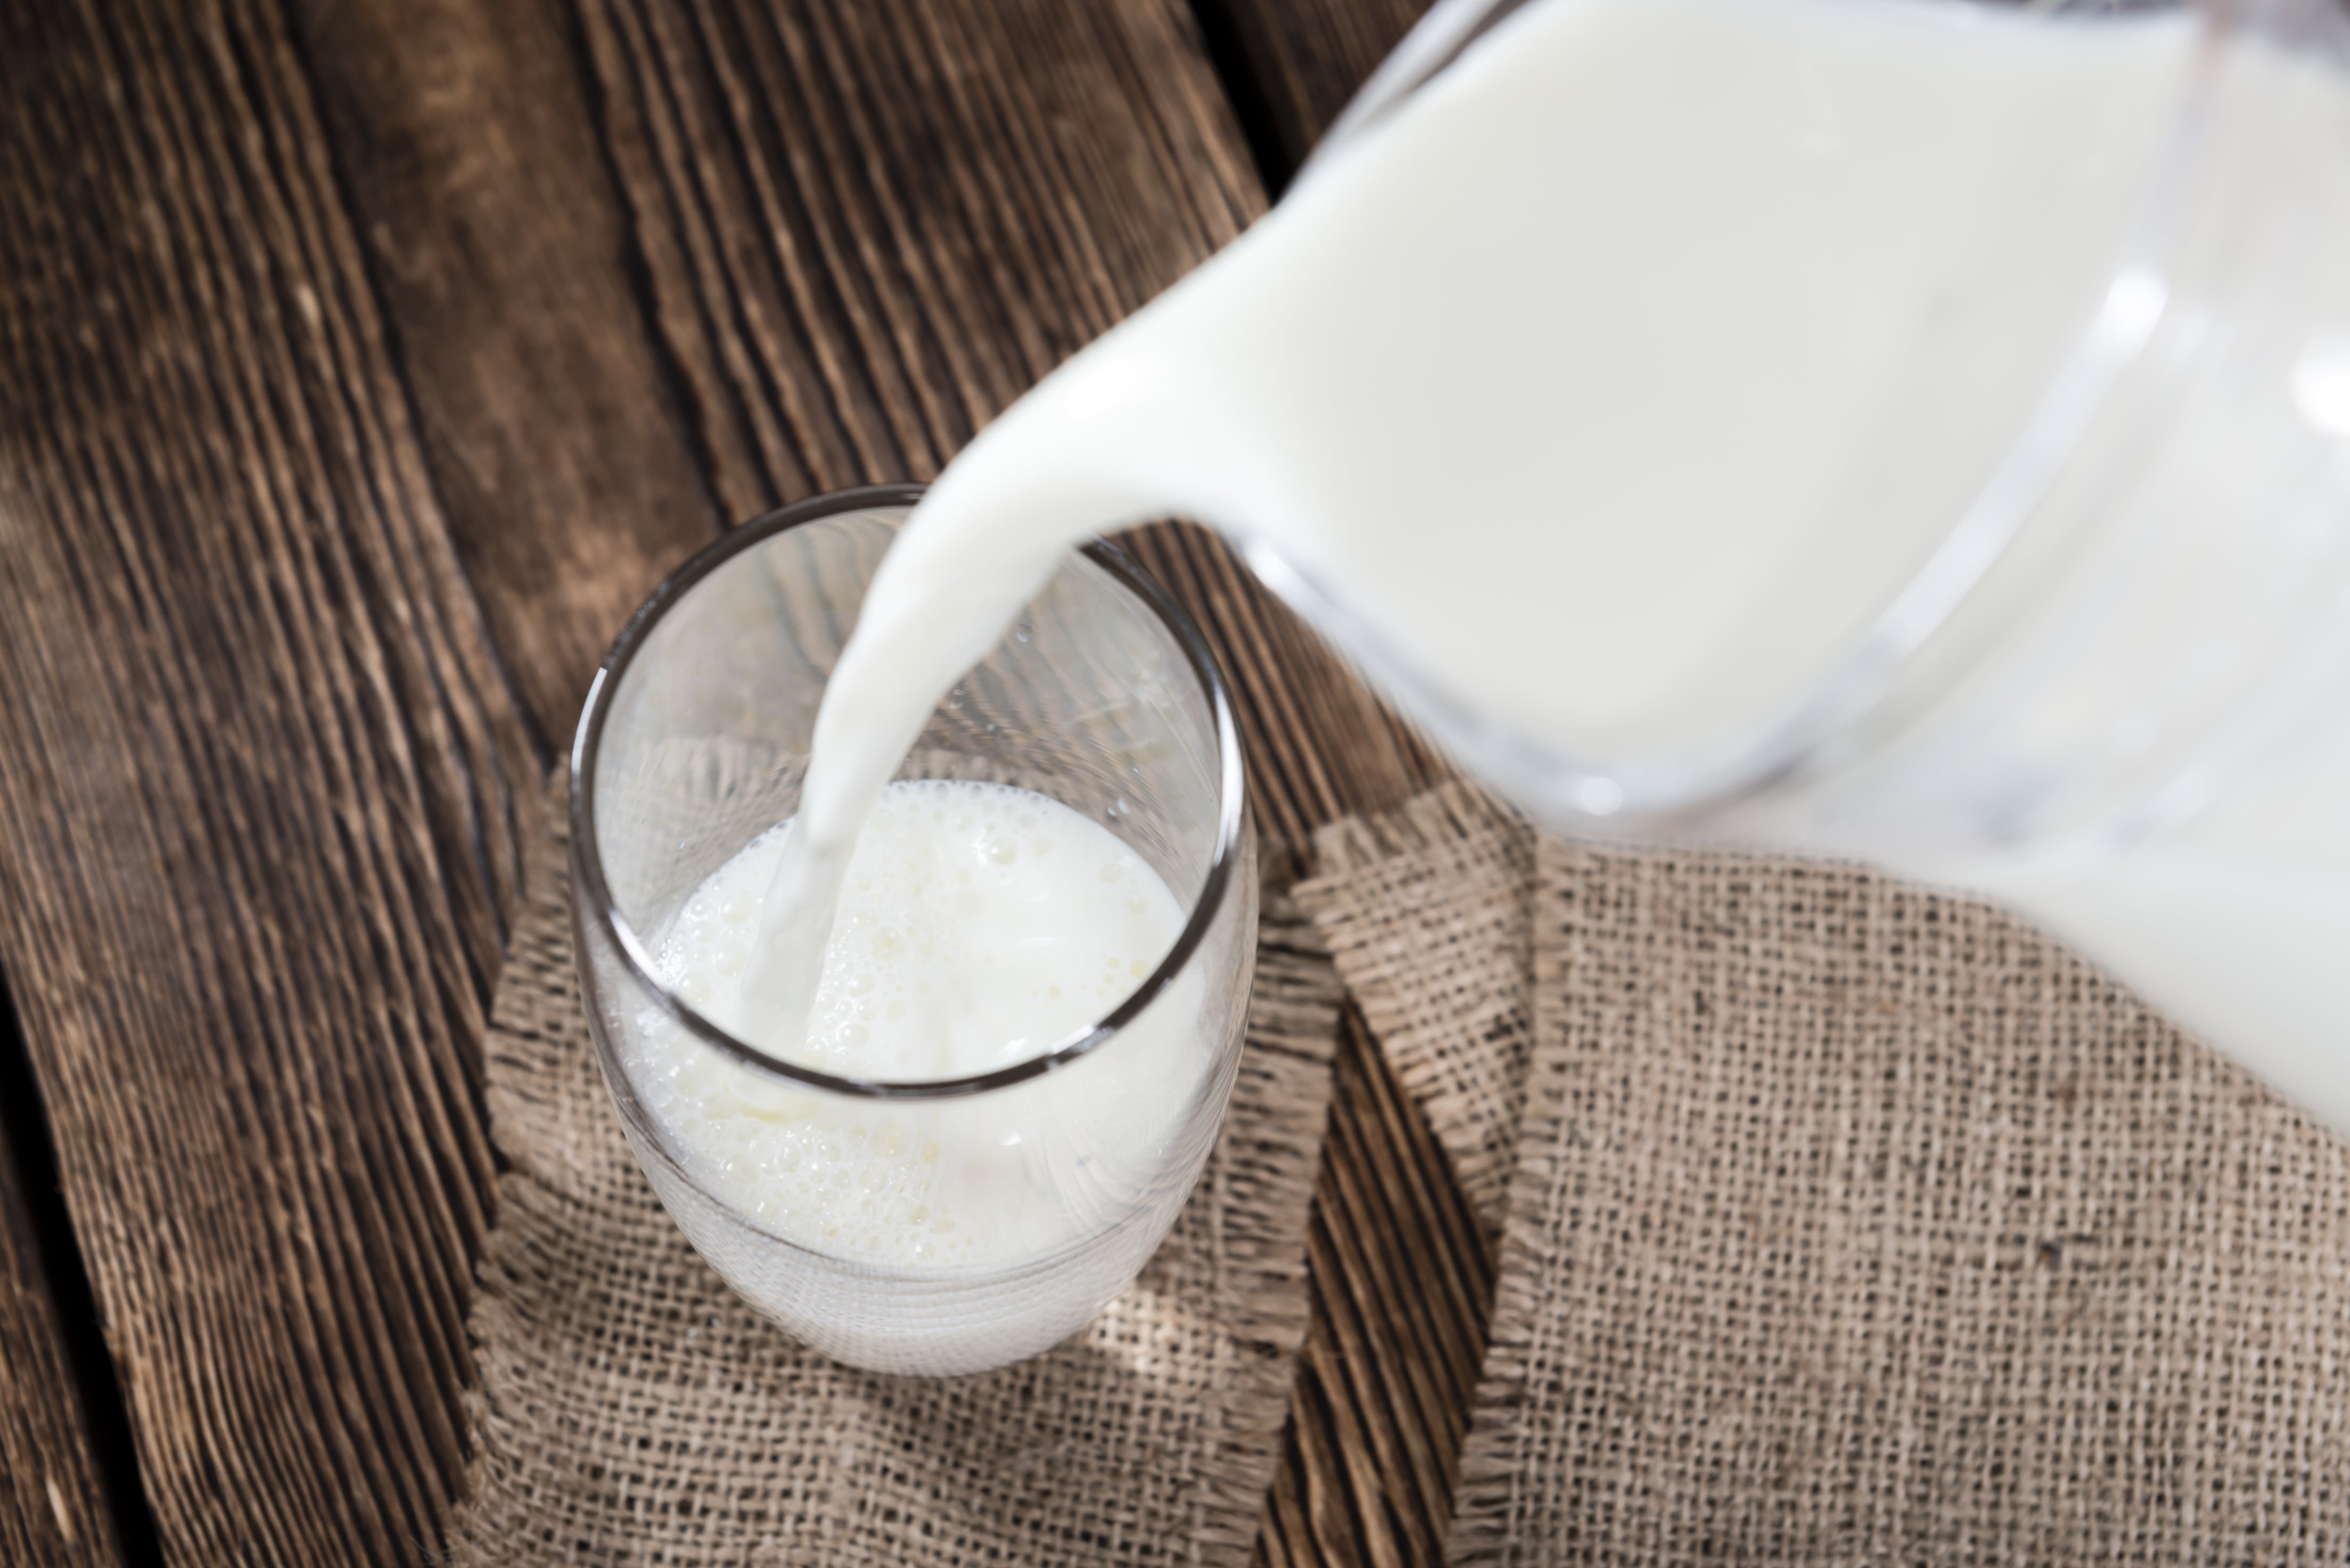 How Do Non-Dairy Milks Affect Child Development?